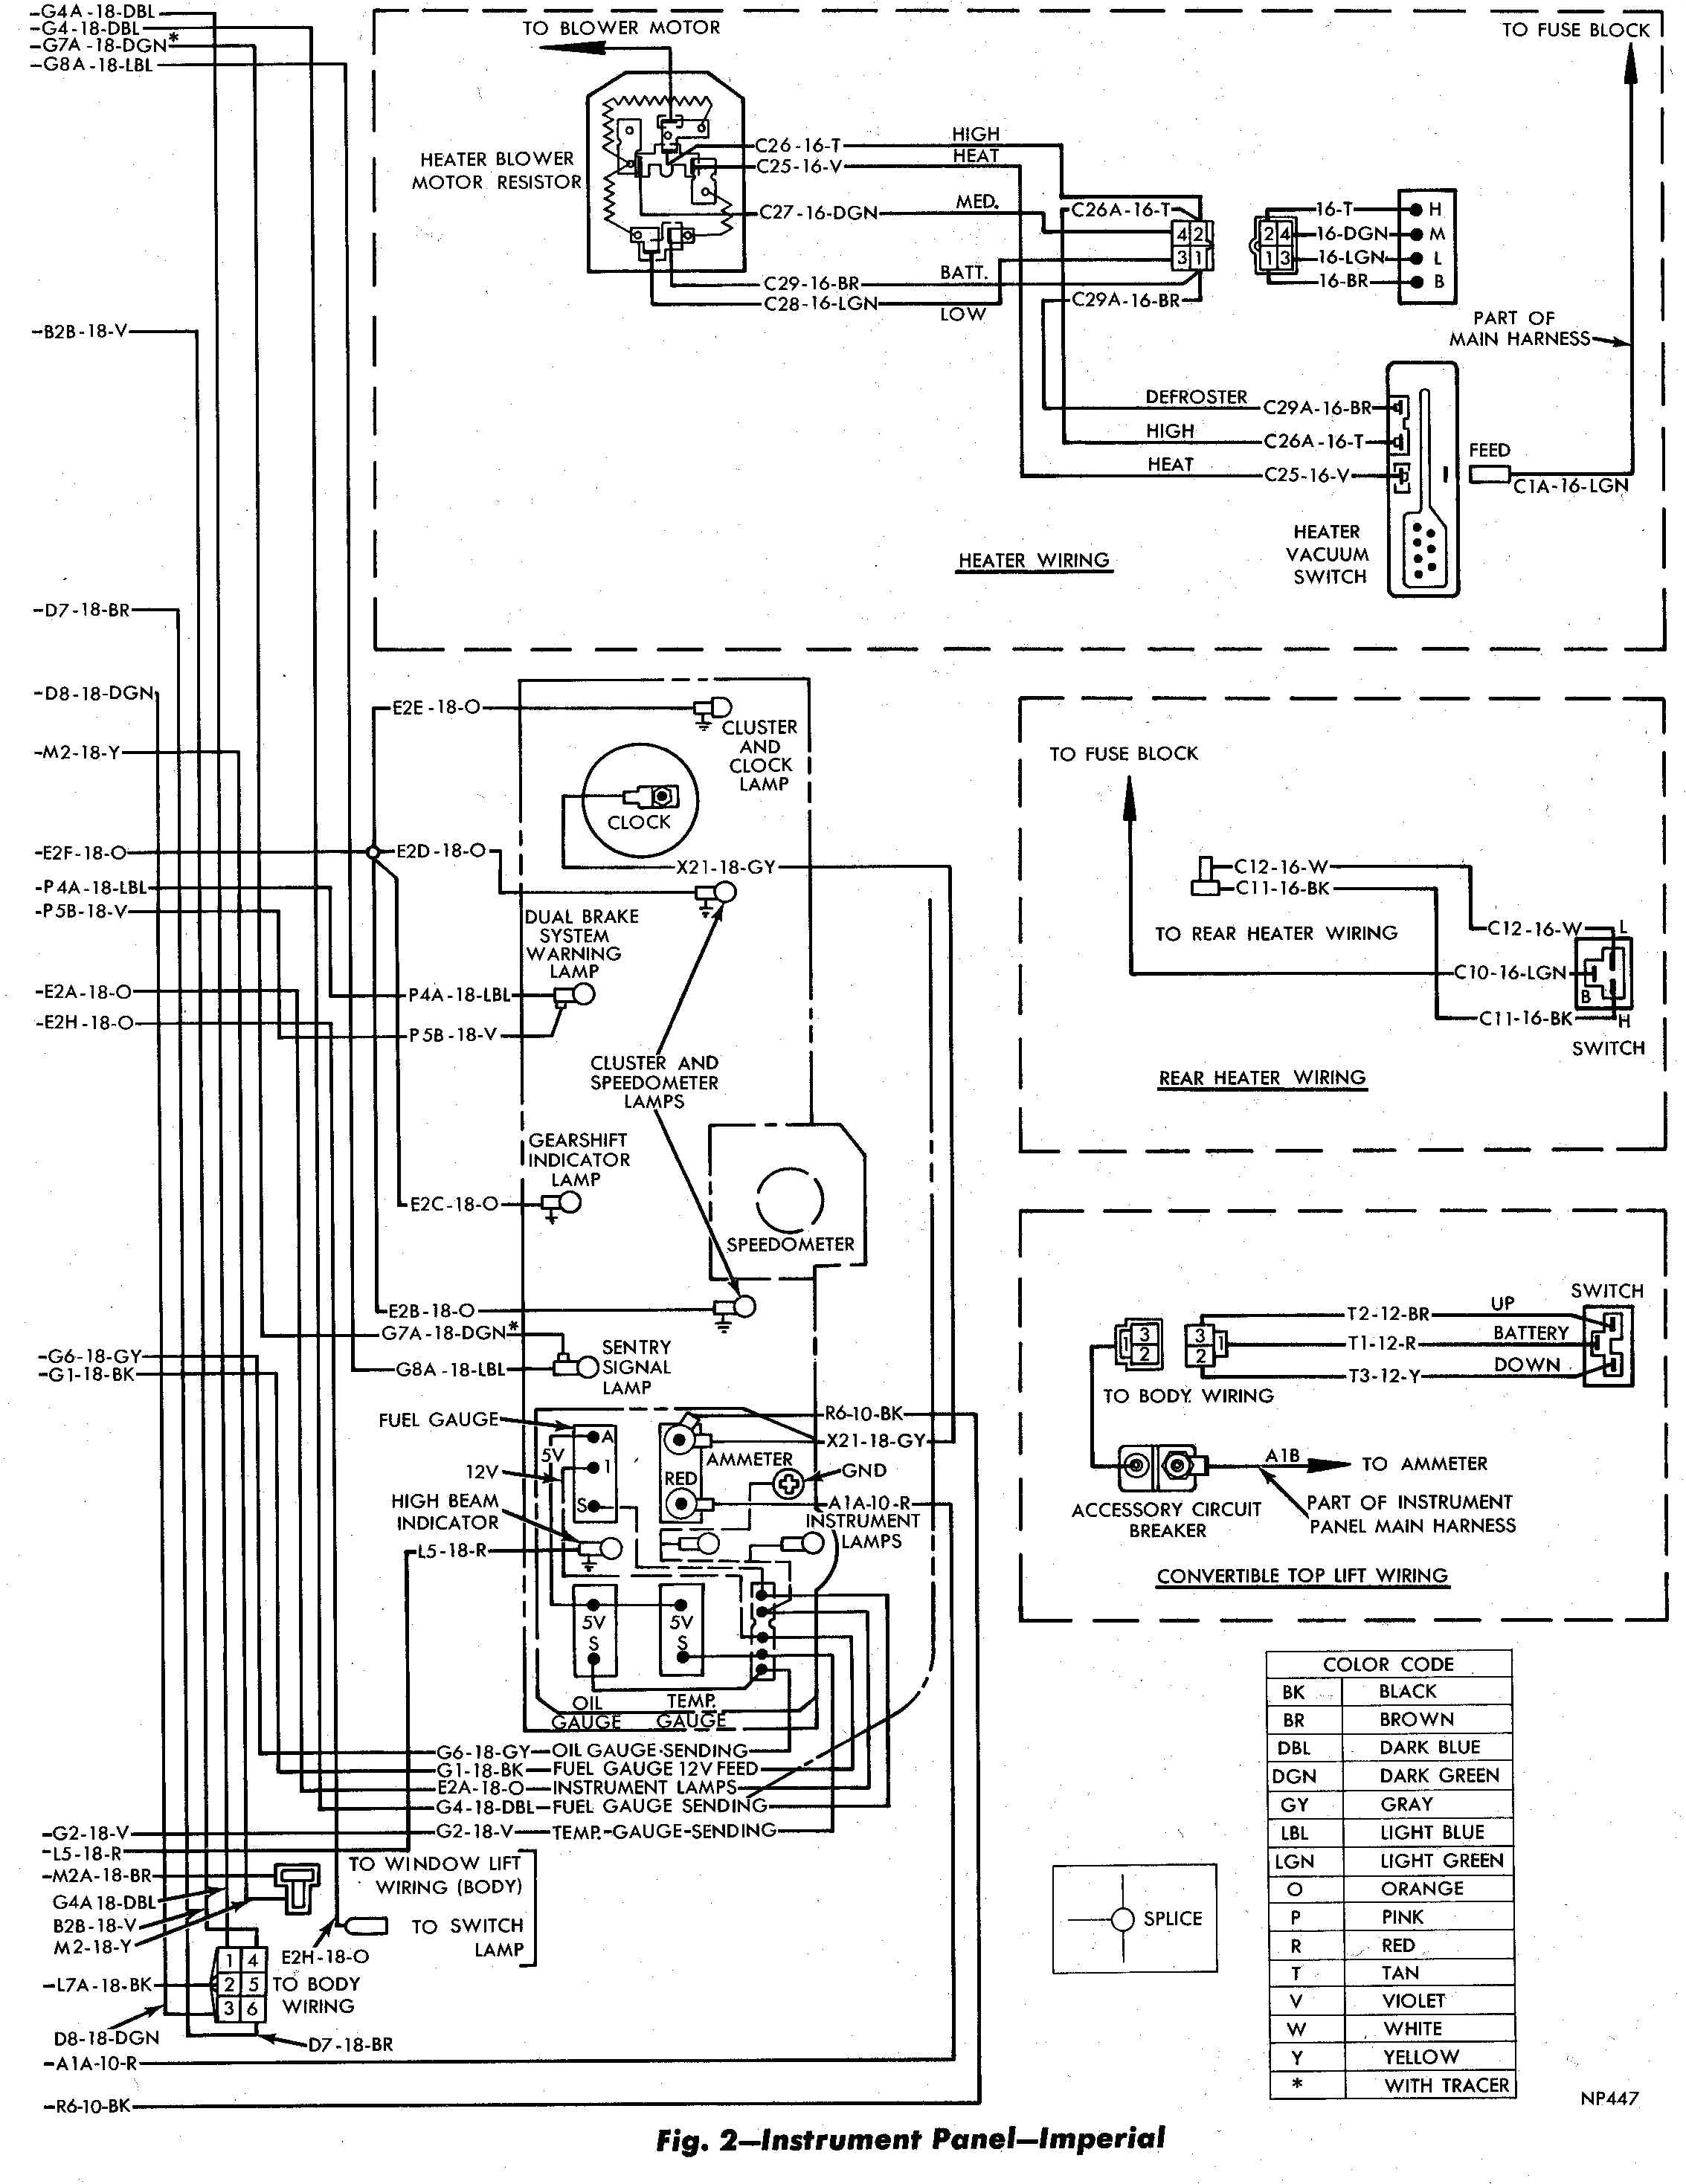 1967 imperial wiring diagrams